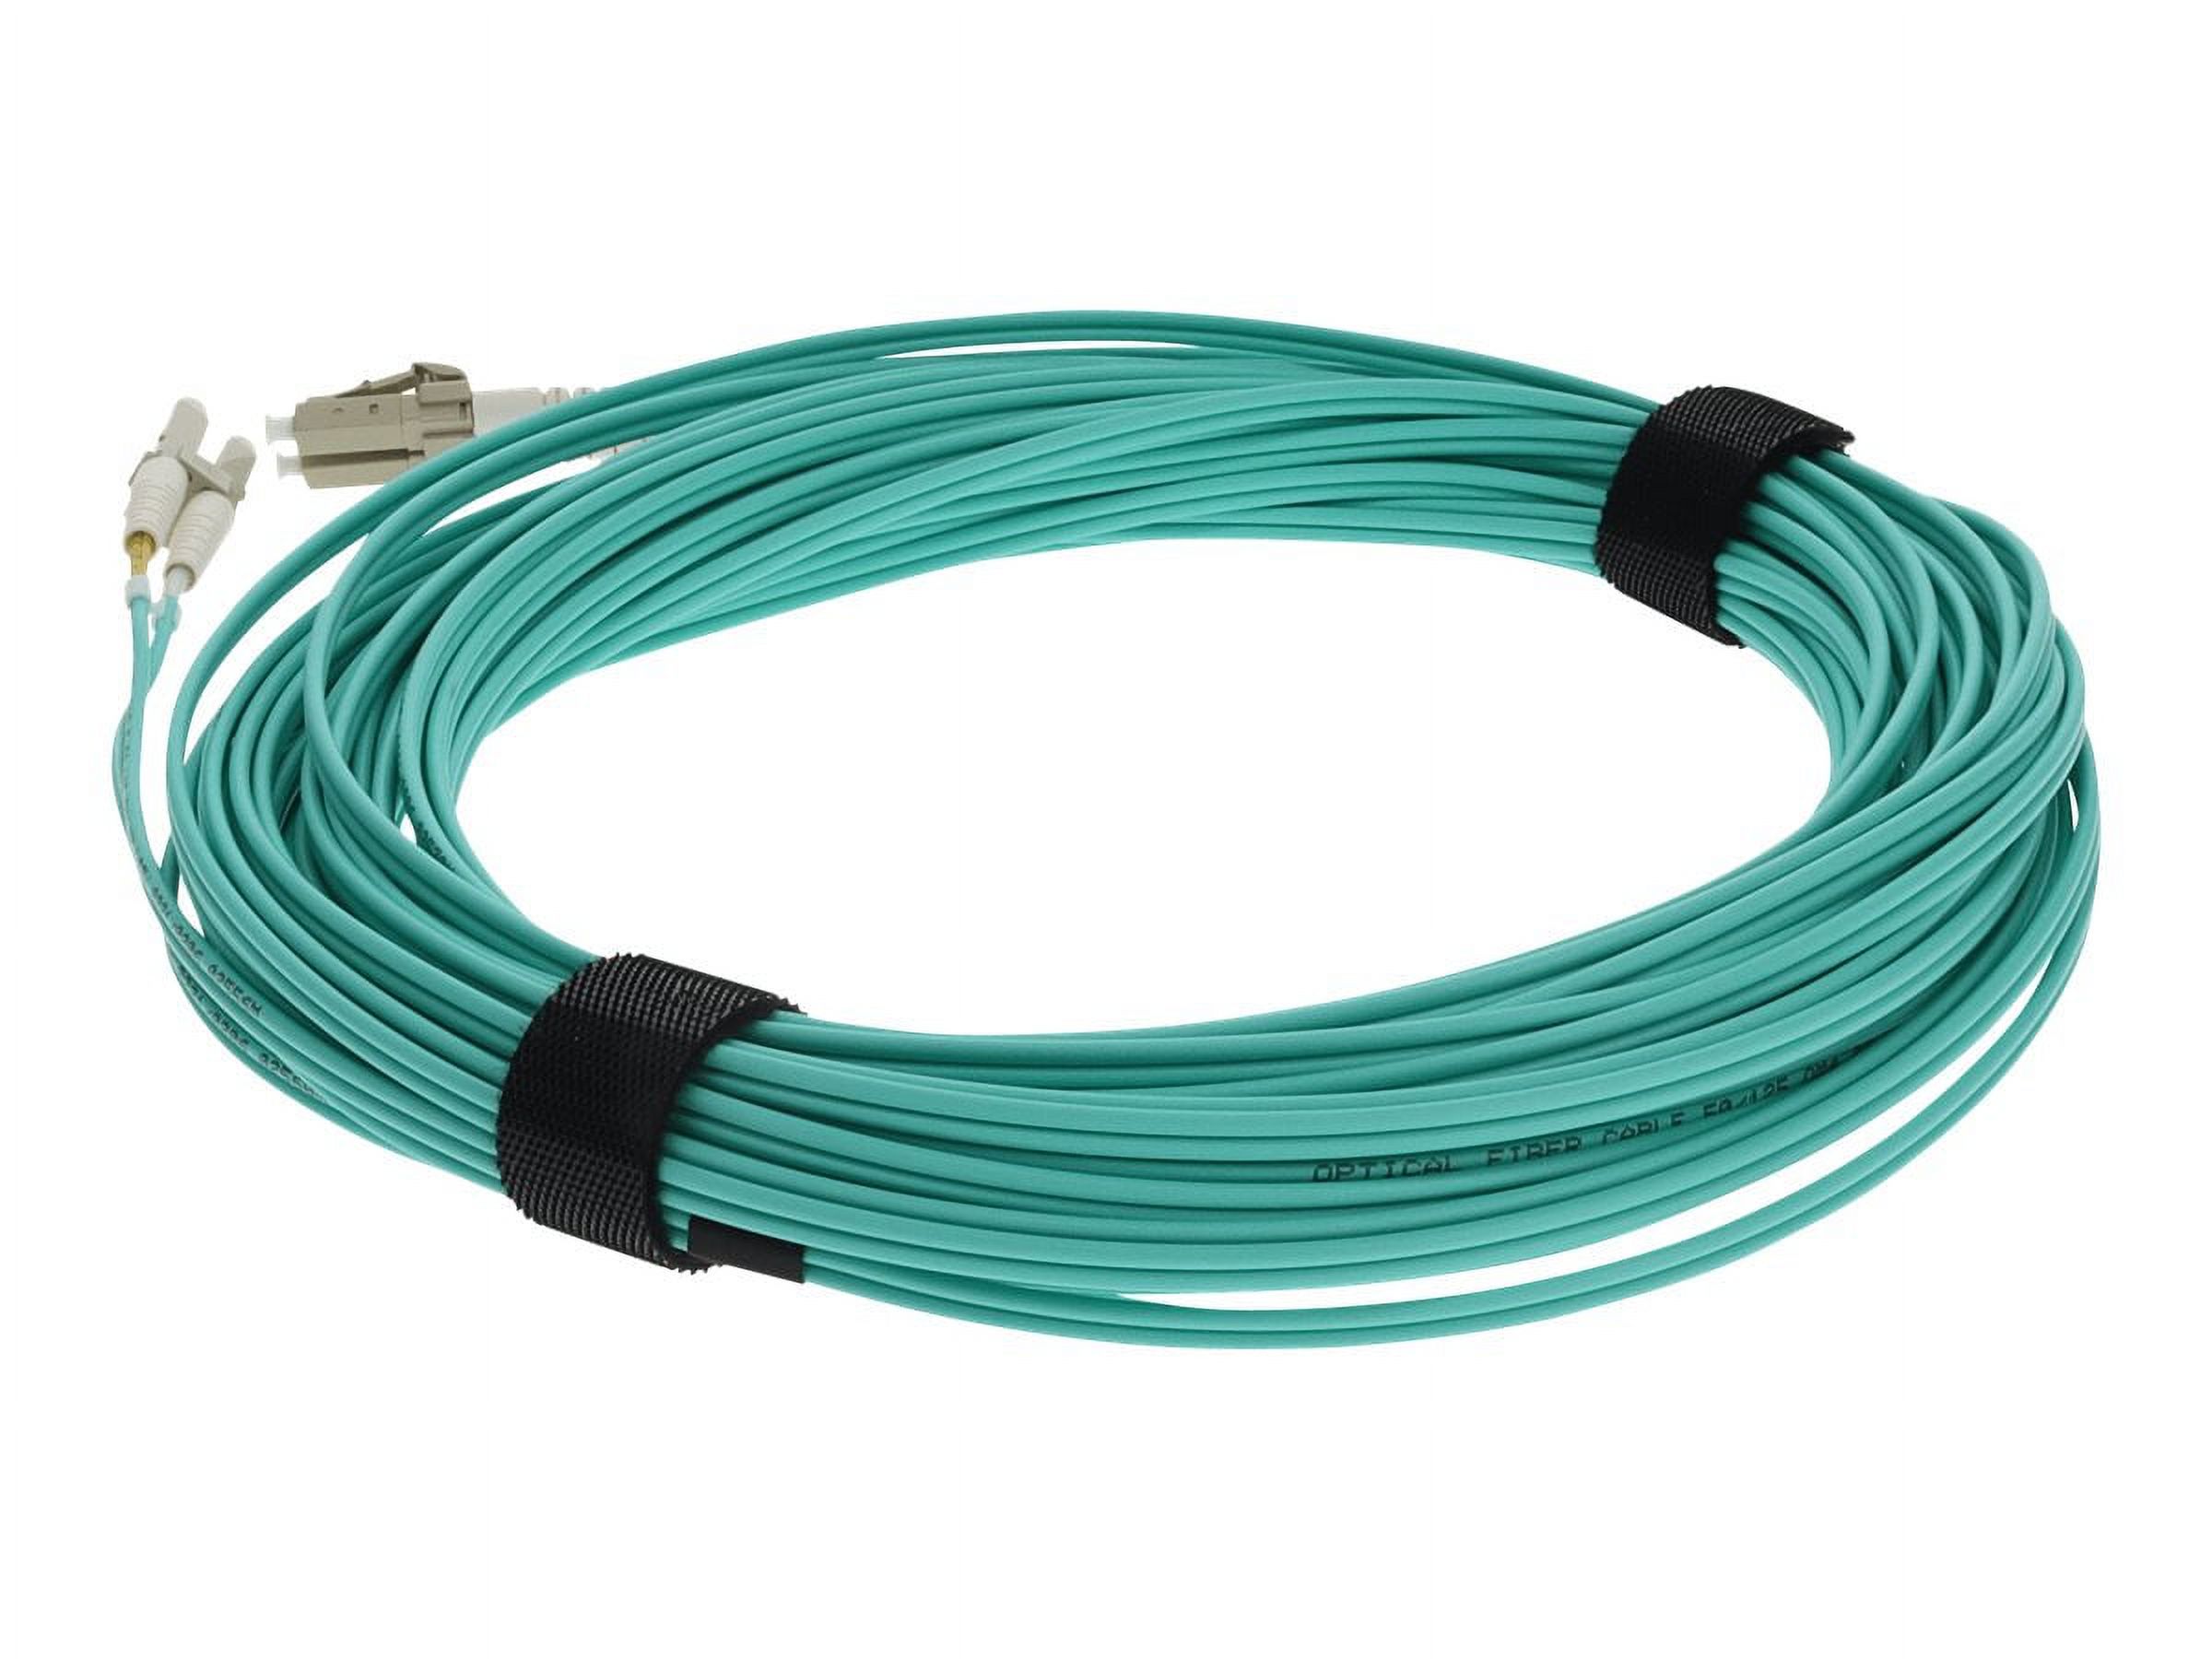 AddOn 50m LC OM3 Aqua Patch Cable - patch cable - 164 ft - aqua - image 4 of 8